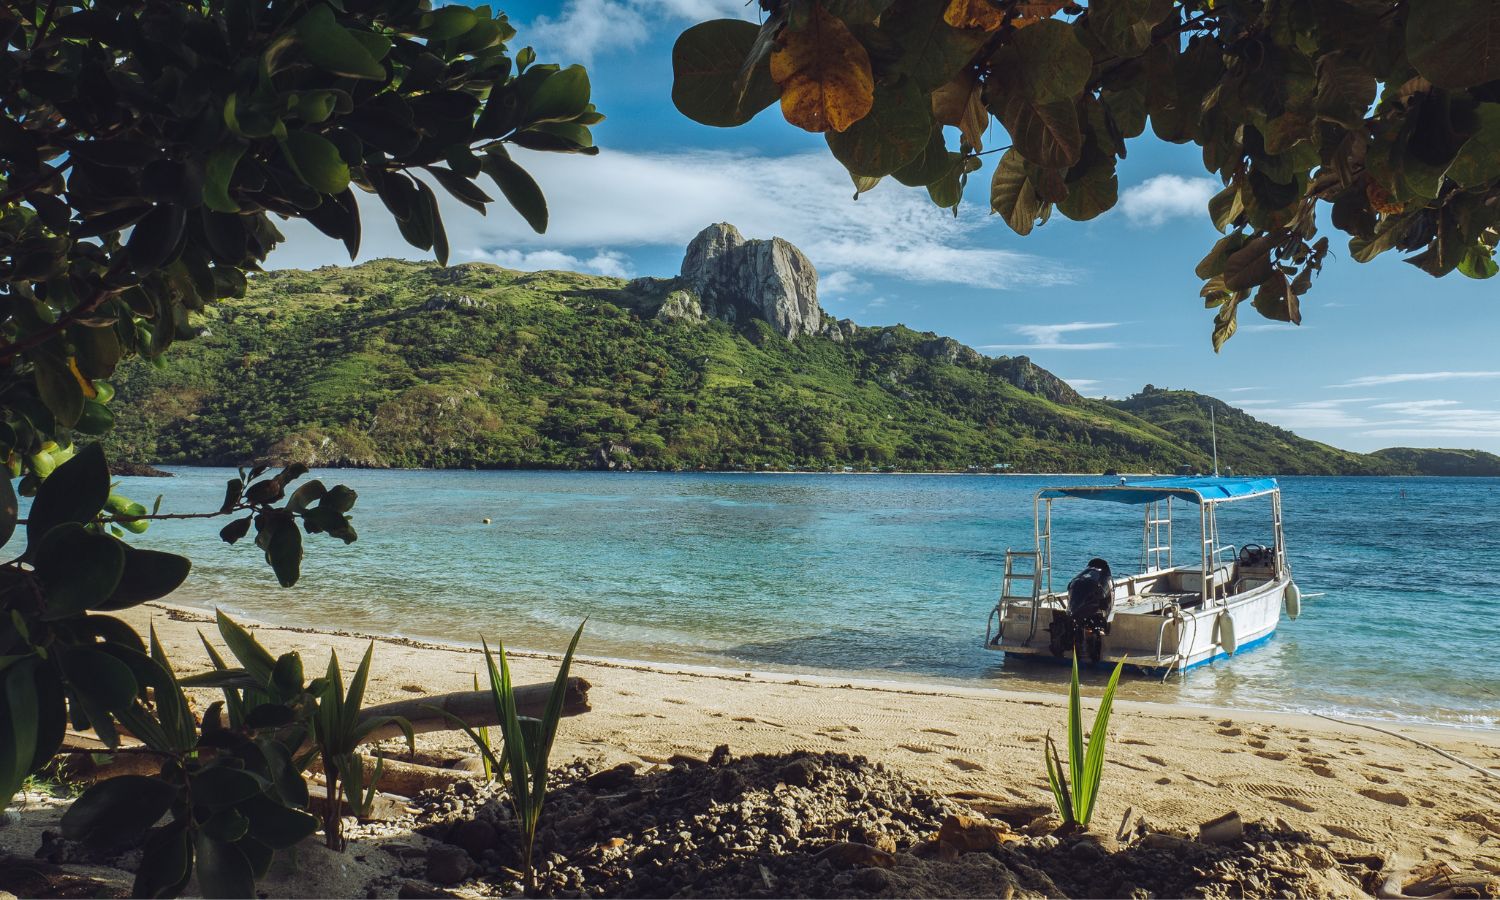 Tips for Fiji travel